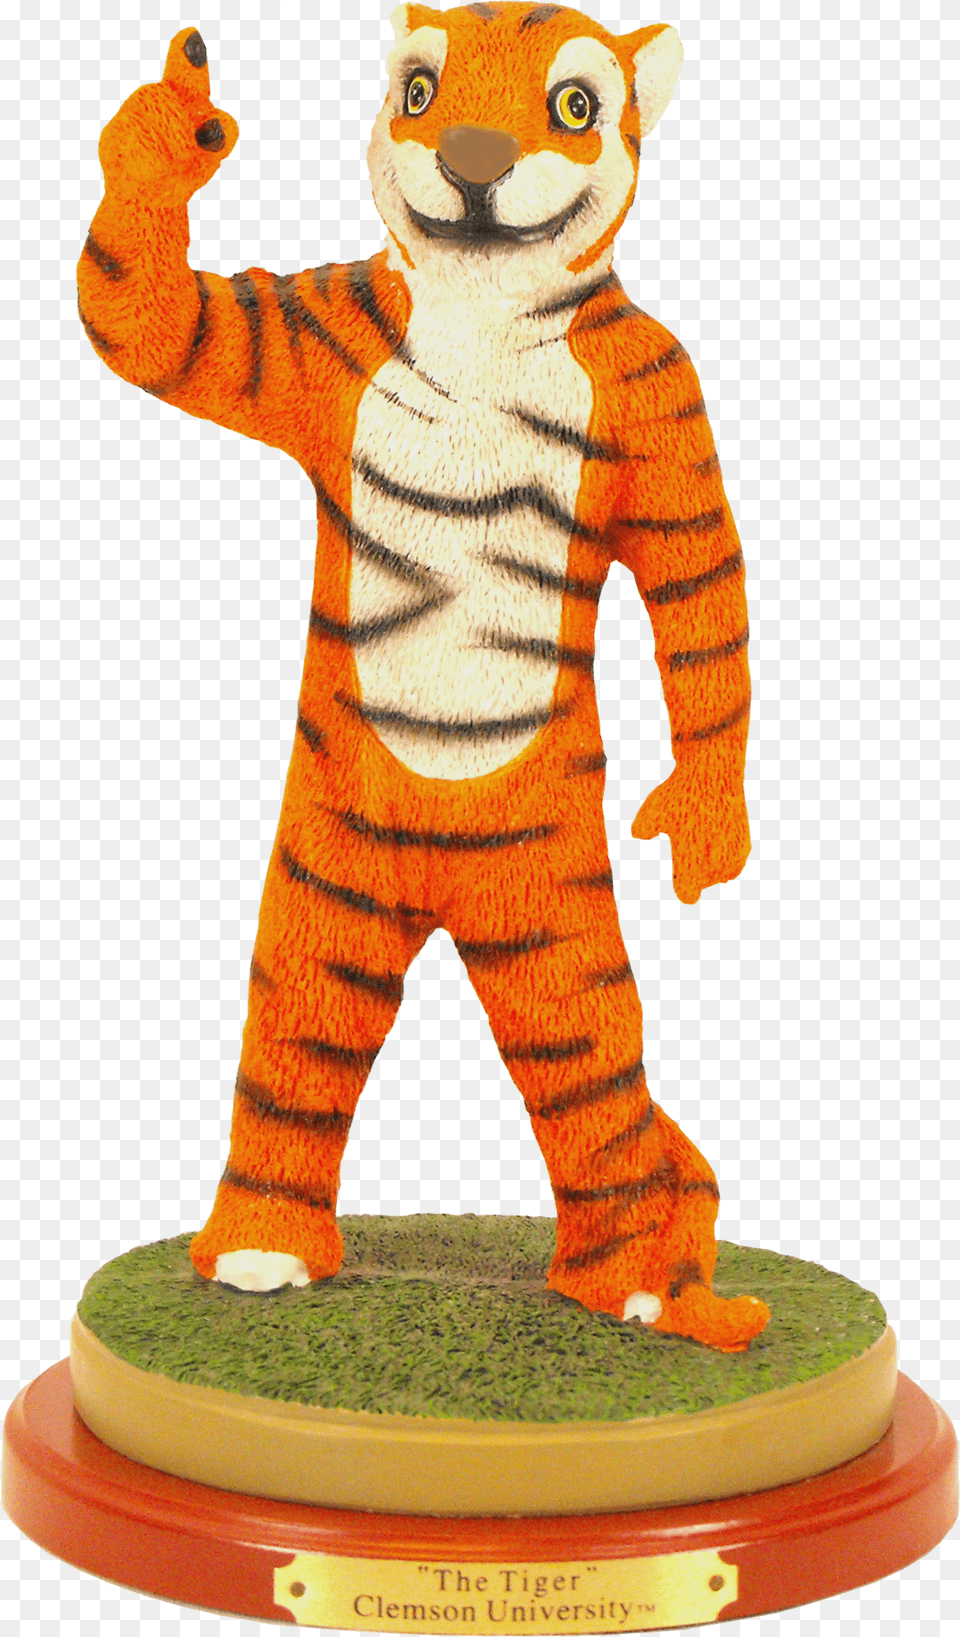 Mascot For Clemson University, Animal, Mammal, Tiger, Wildlife Png Image